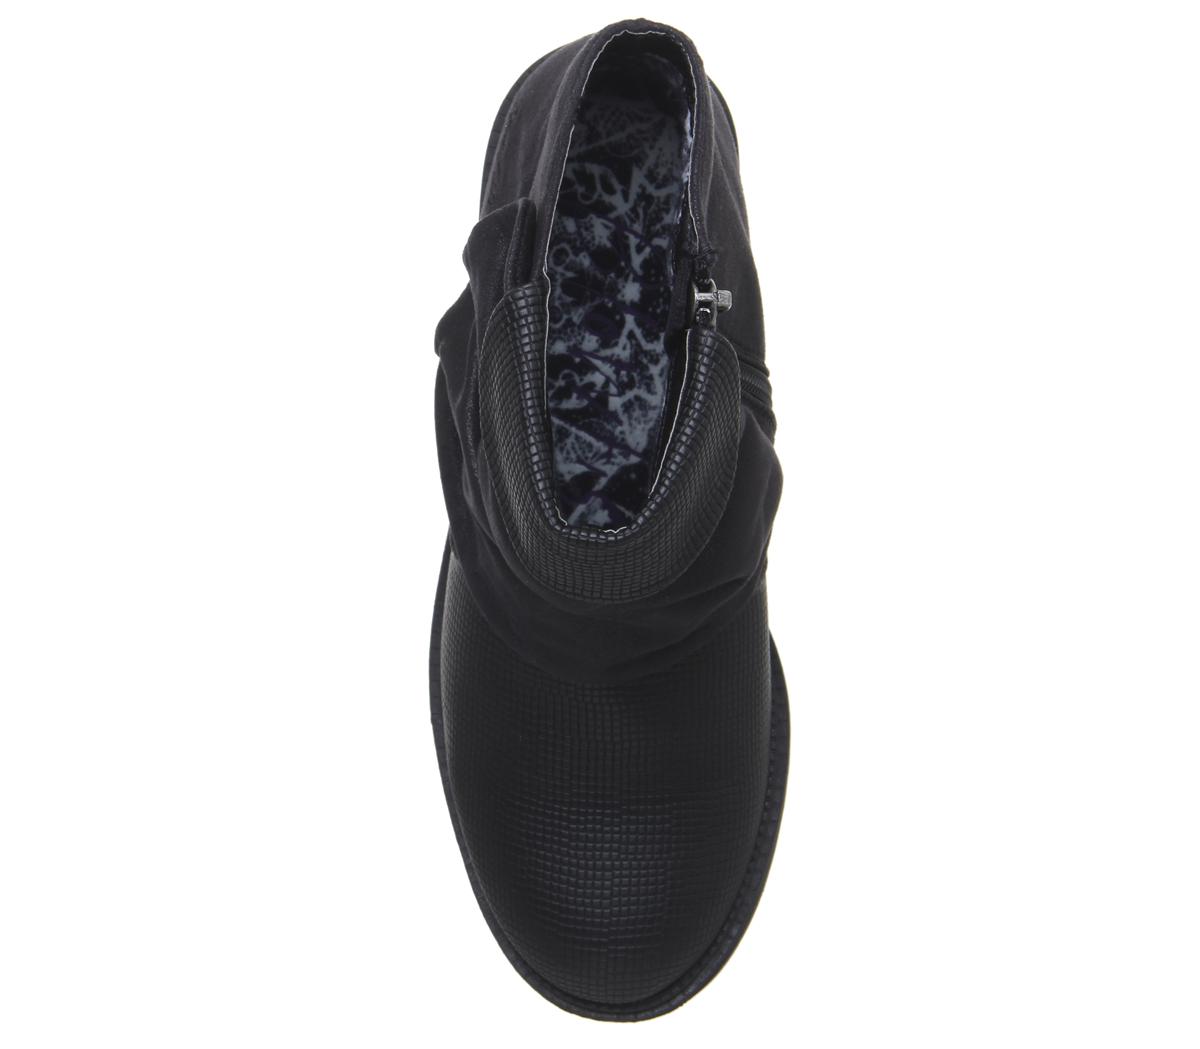 Blowfish Malibu Vynn Button Boots Black Rocksteady - Women's Ankle Boots